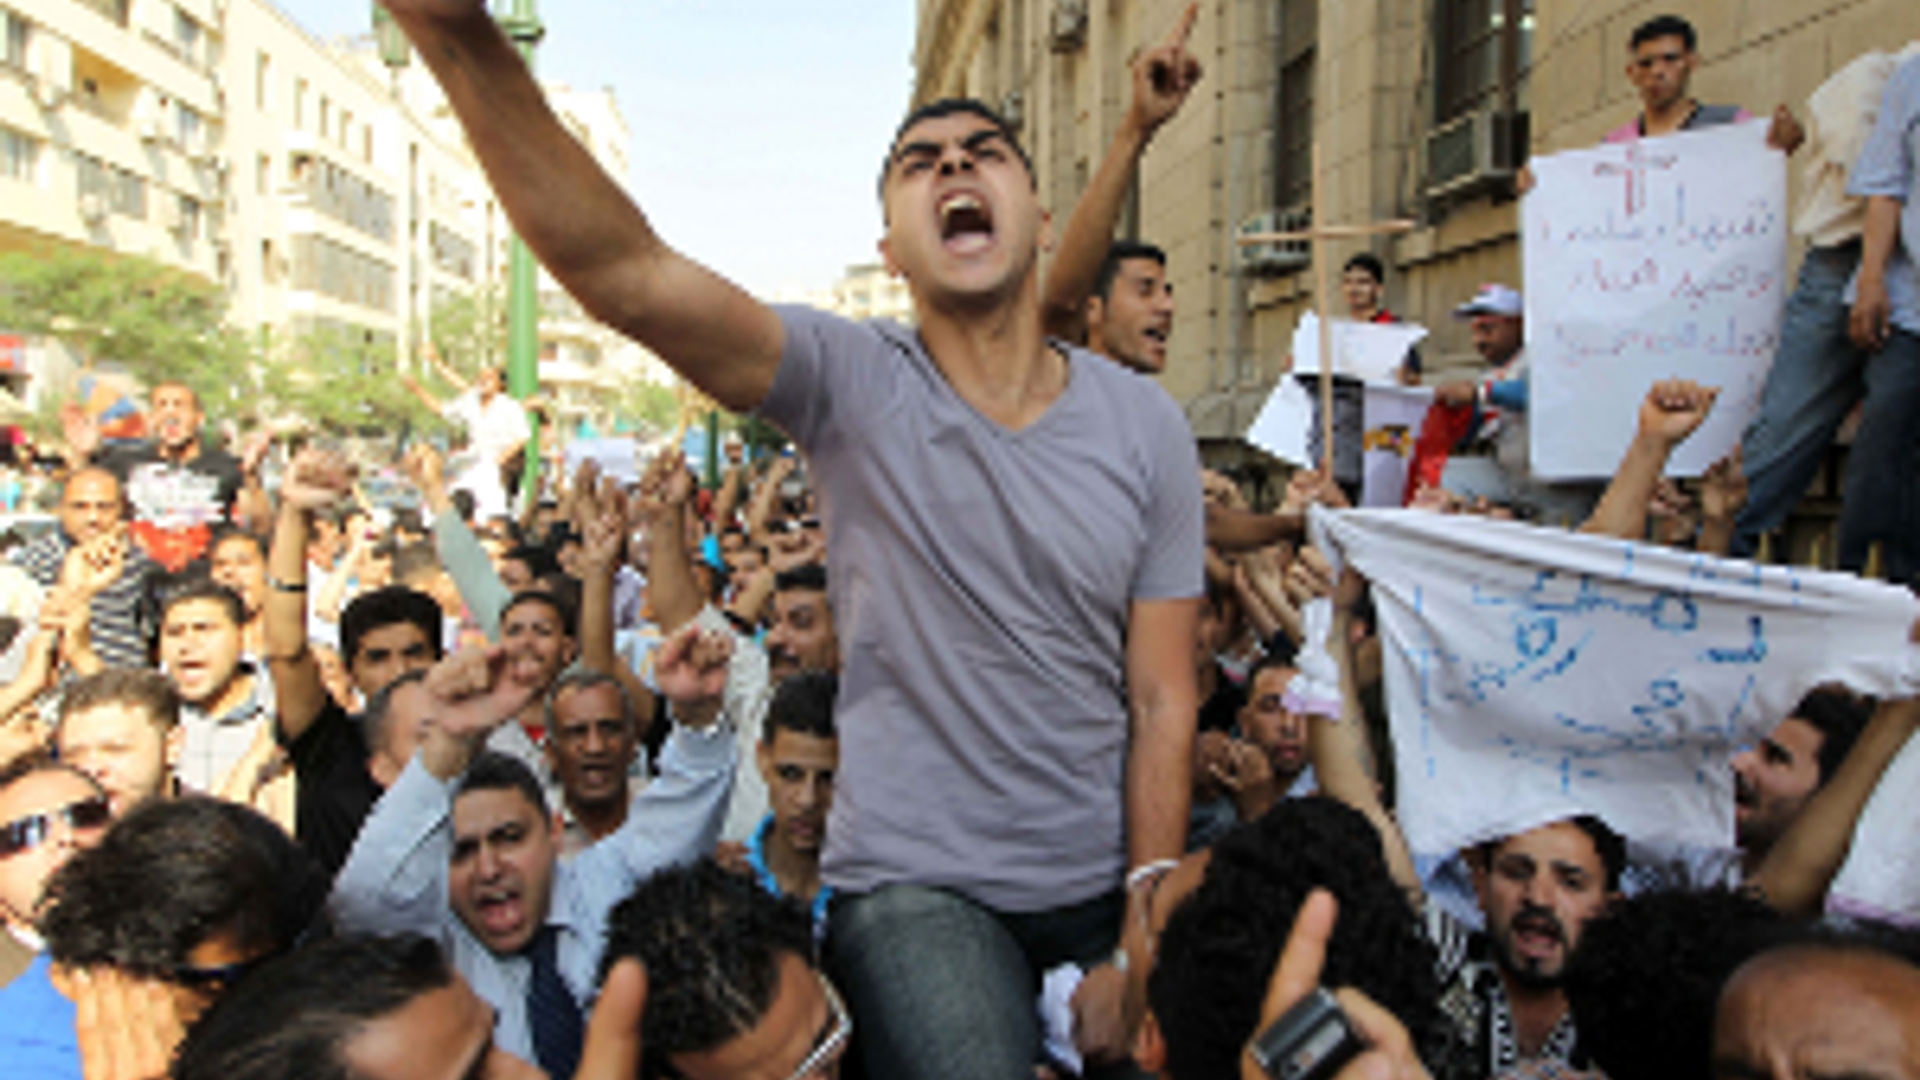 ANP-Egyptprotest_300.jpg